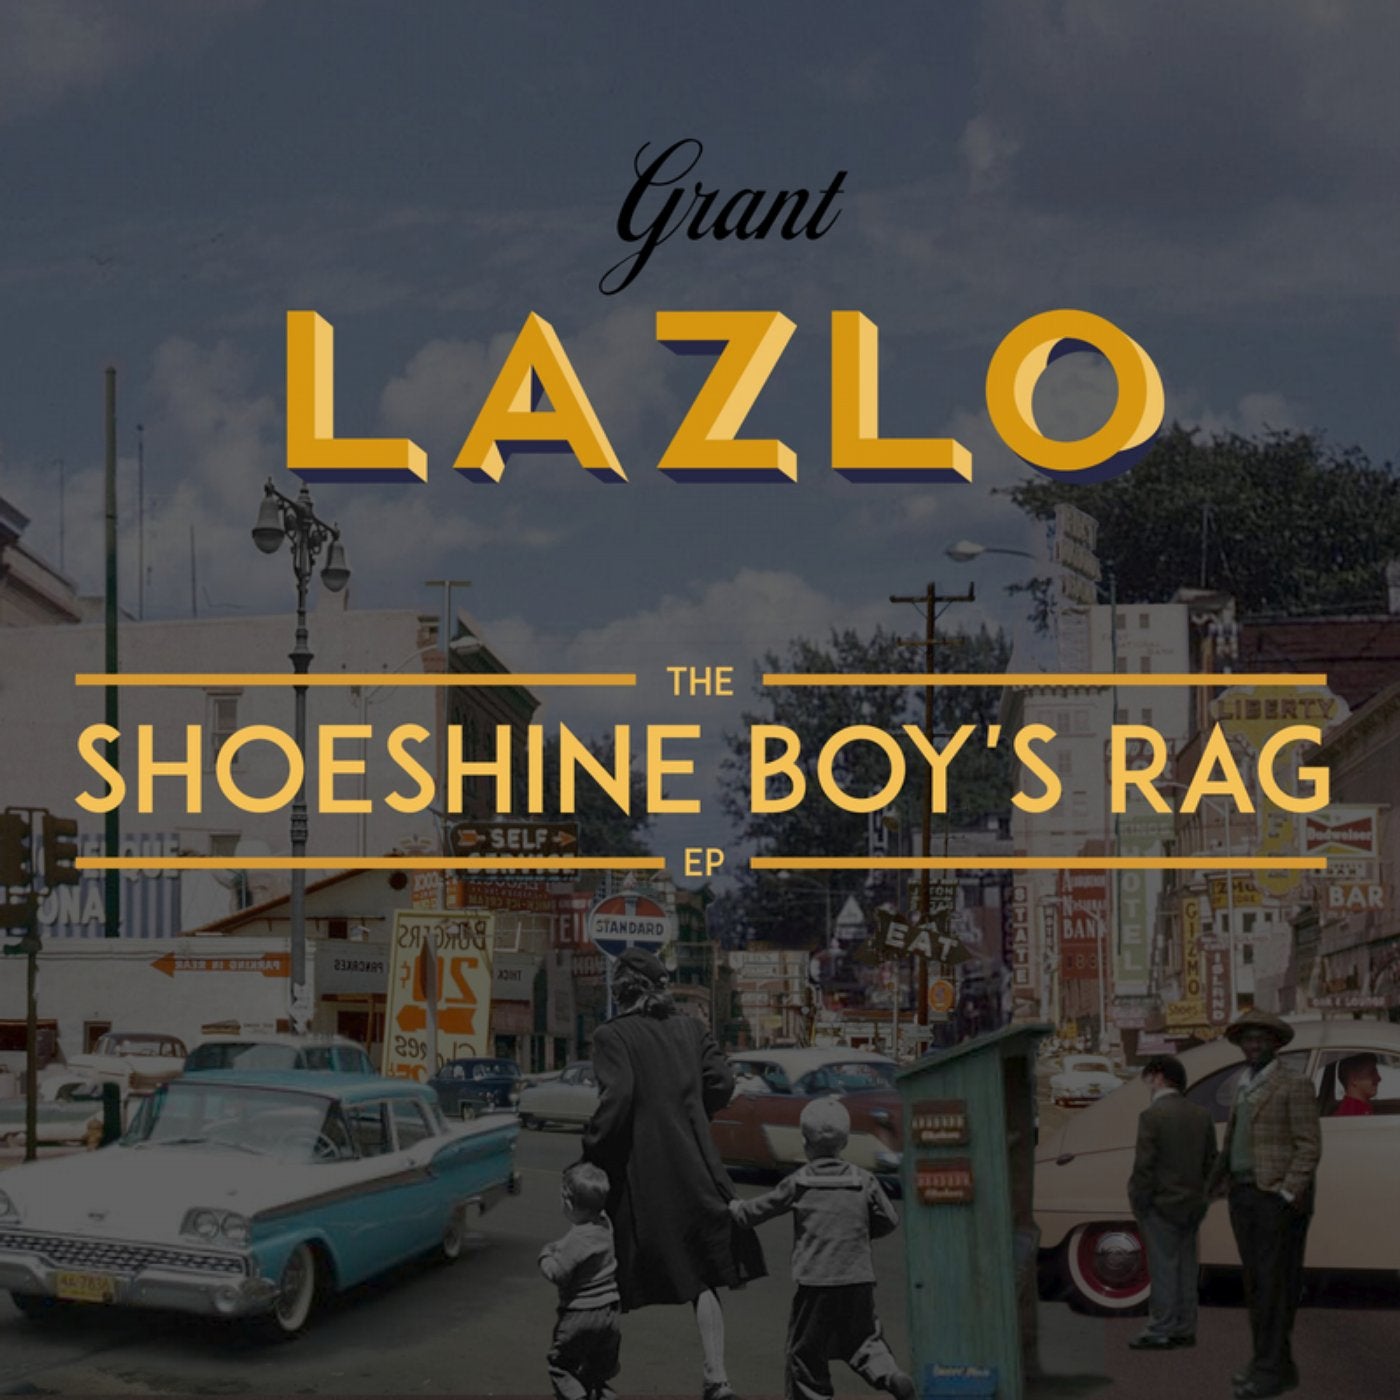 The Shoeshine Boy's Rag